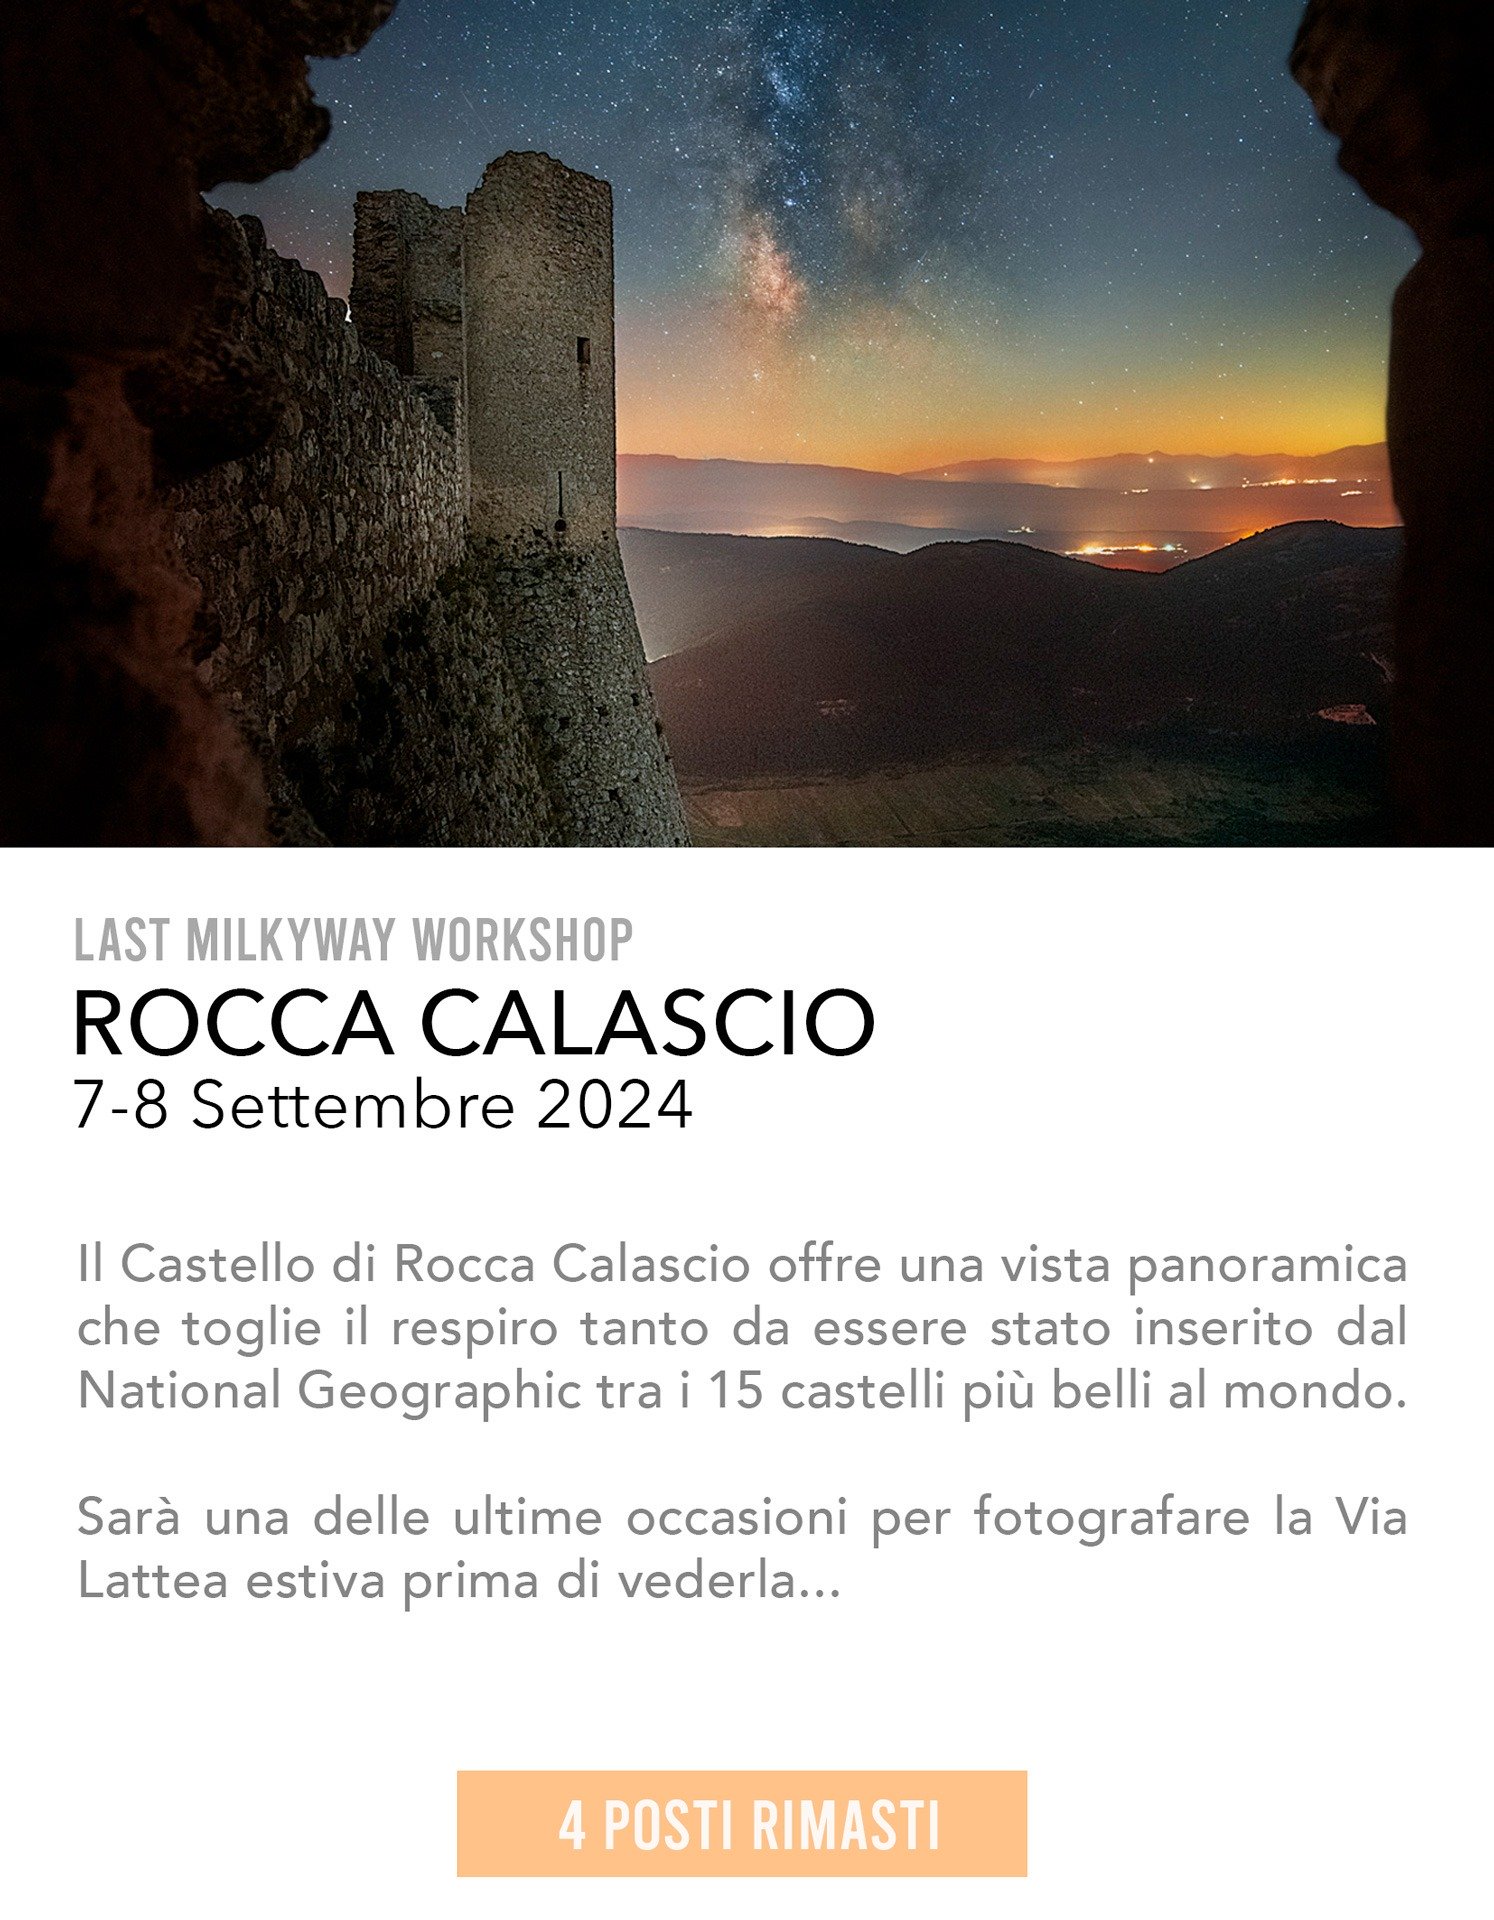 Workshop fotografico Rocca Calascio, Fotografia notturna, Via Lattea